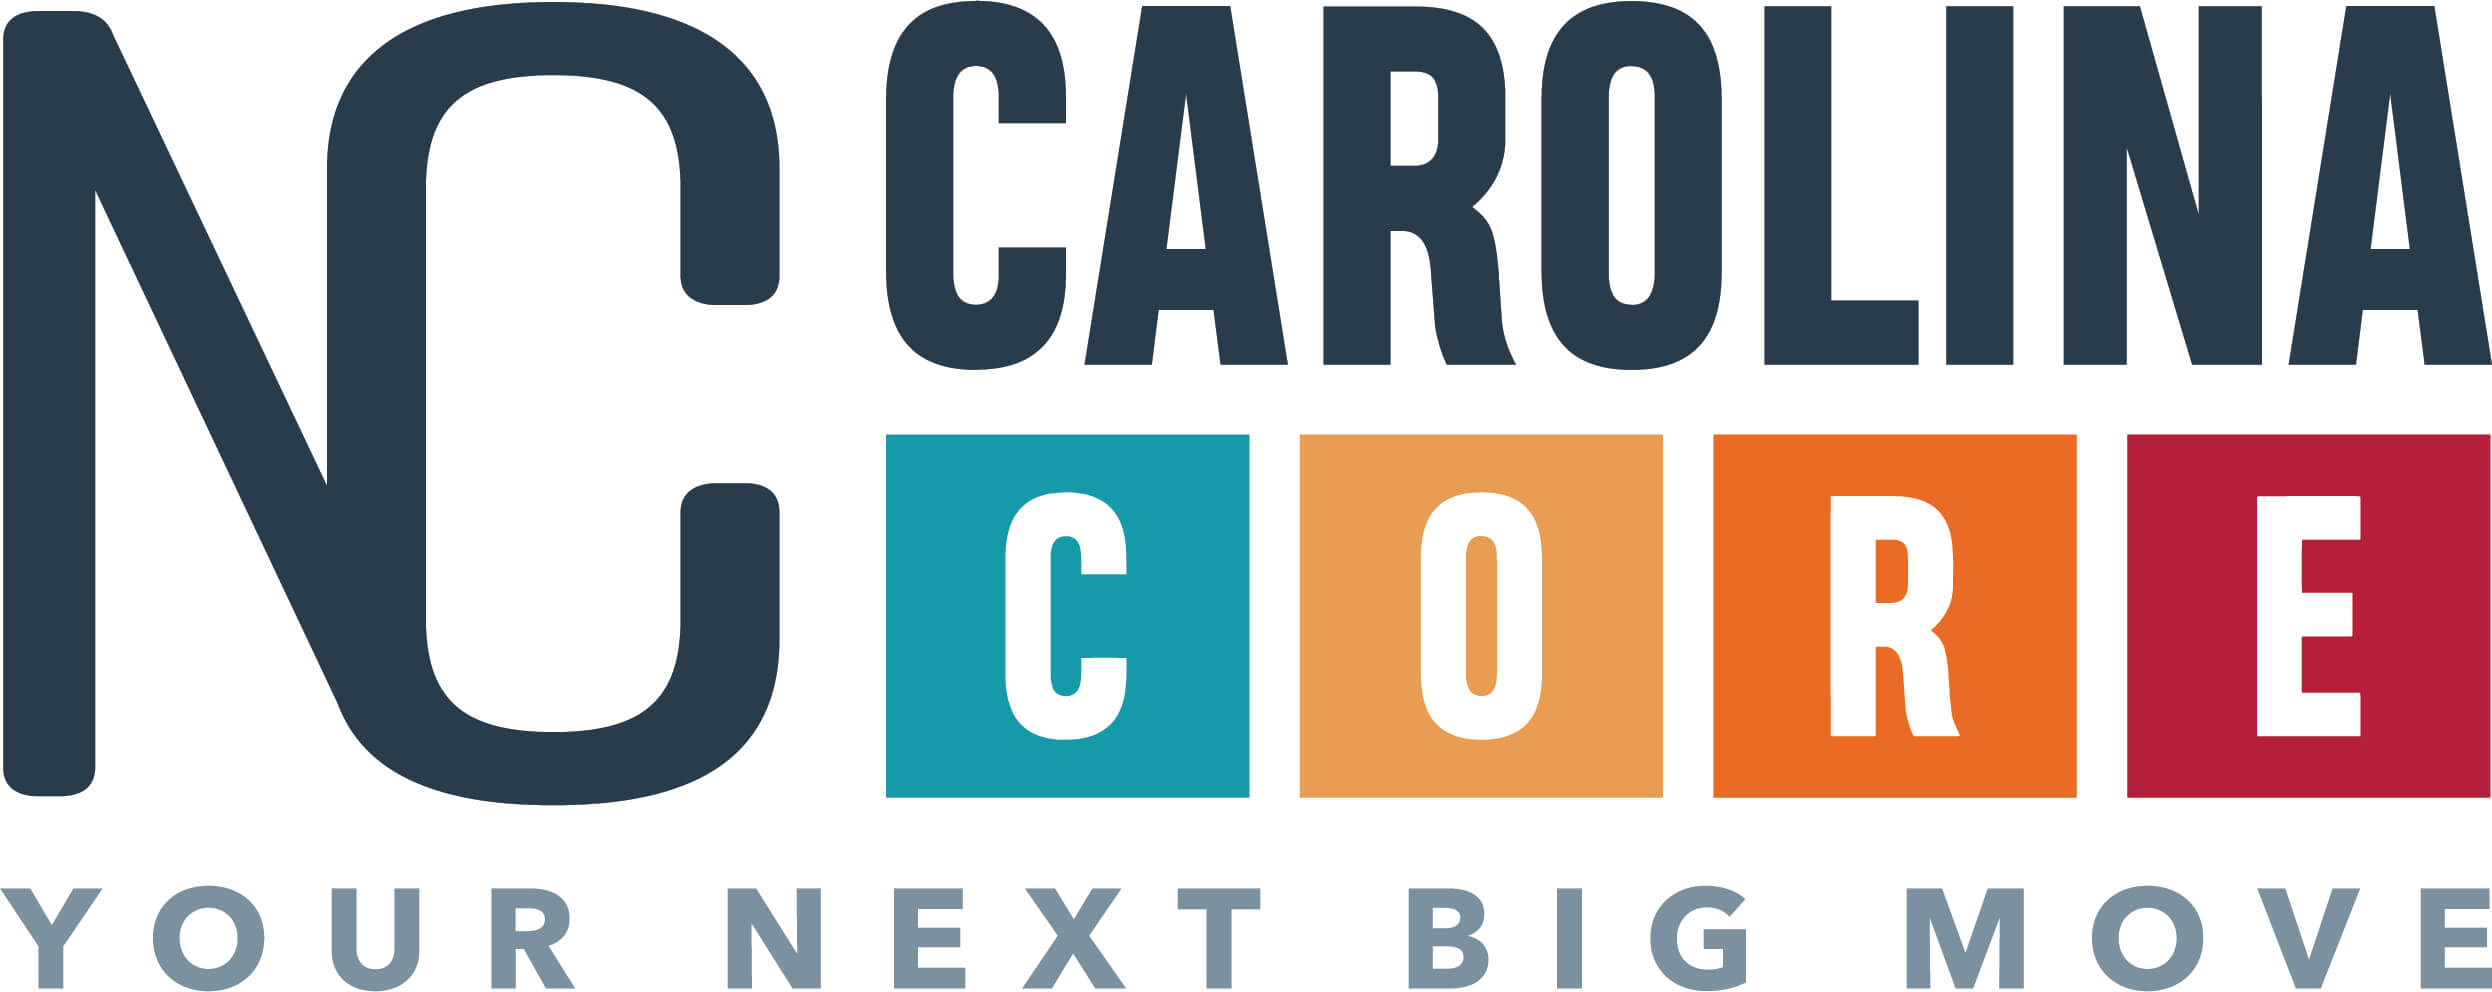 NC Carolina Core logo.